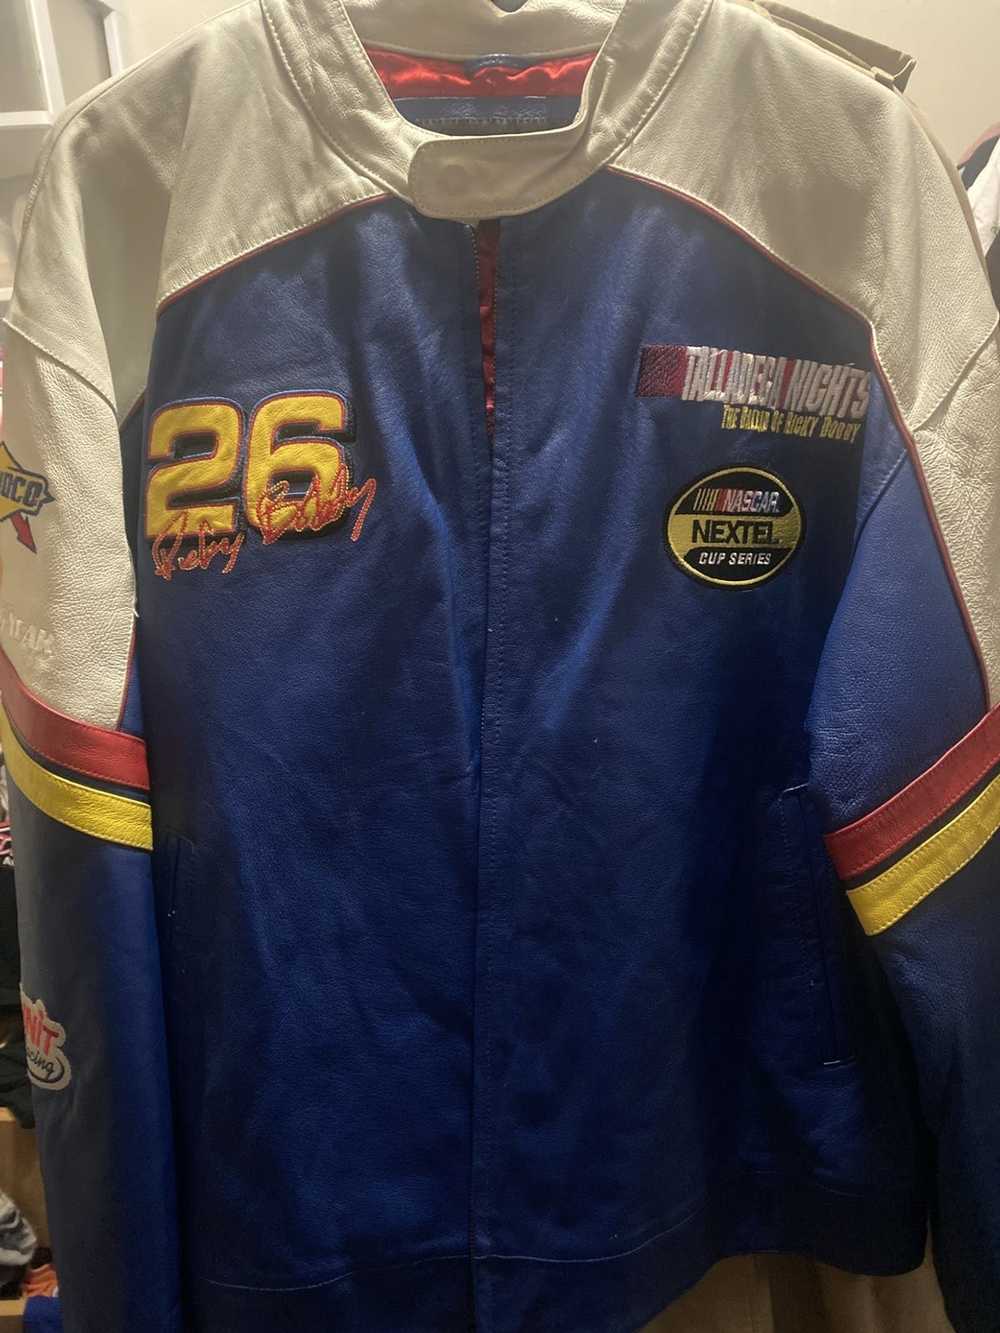 Wilsons Leather Talladega nights racing jacket - image 1